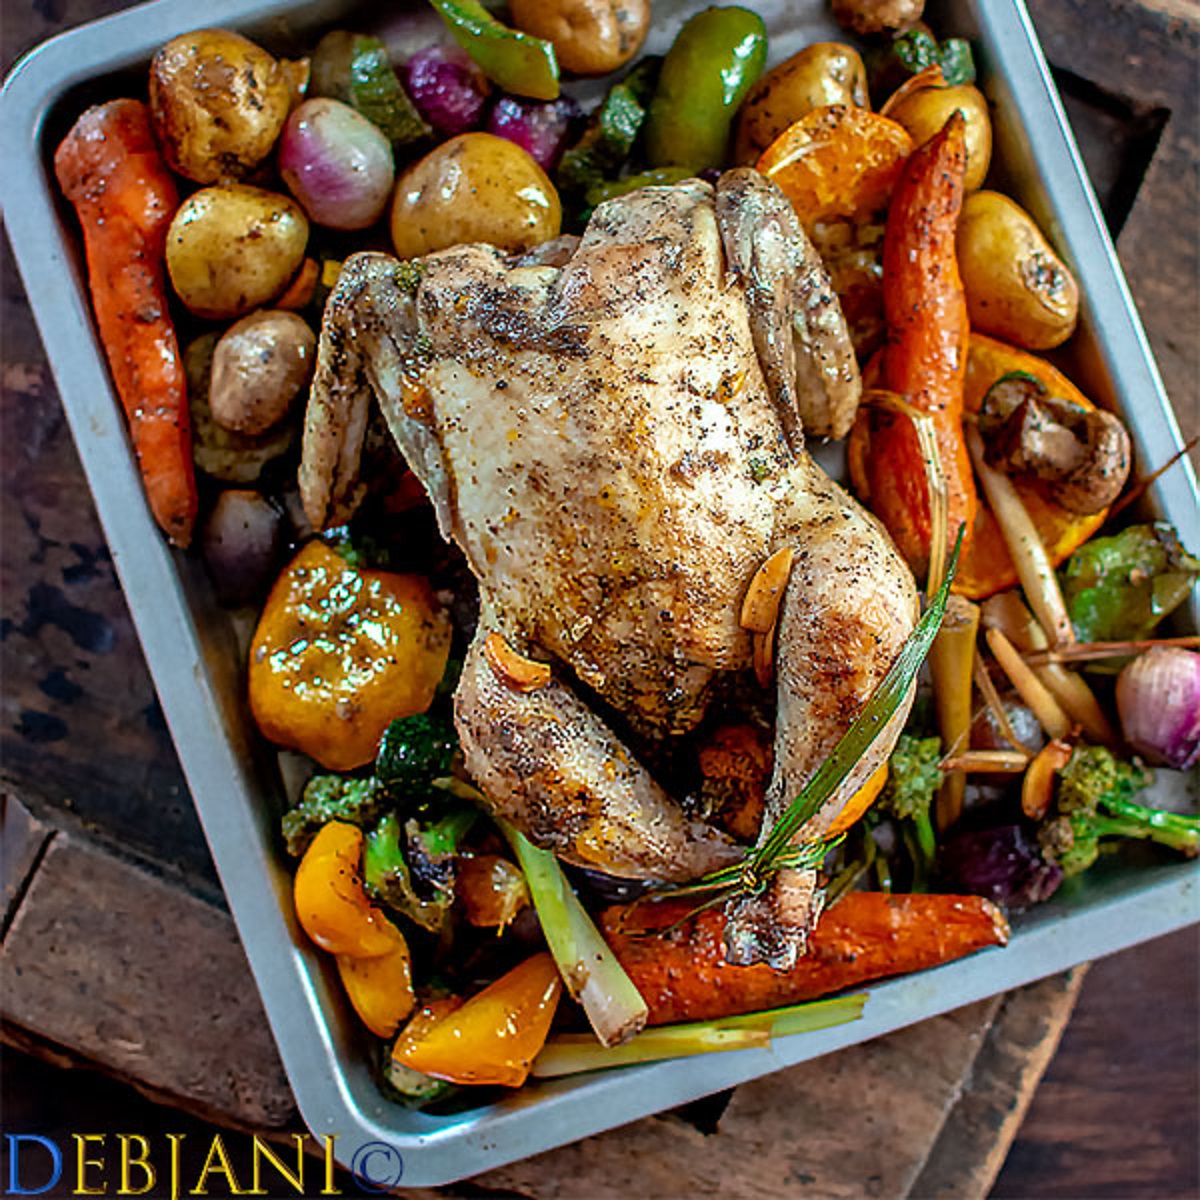 %Orange and Herb Roasted Chicken and Vegetables Recipe debjanir rannaghar